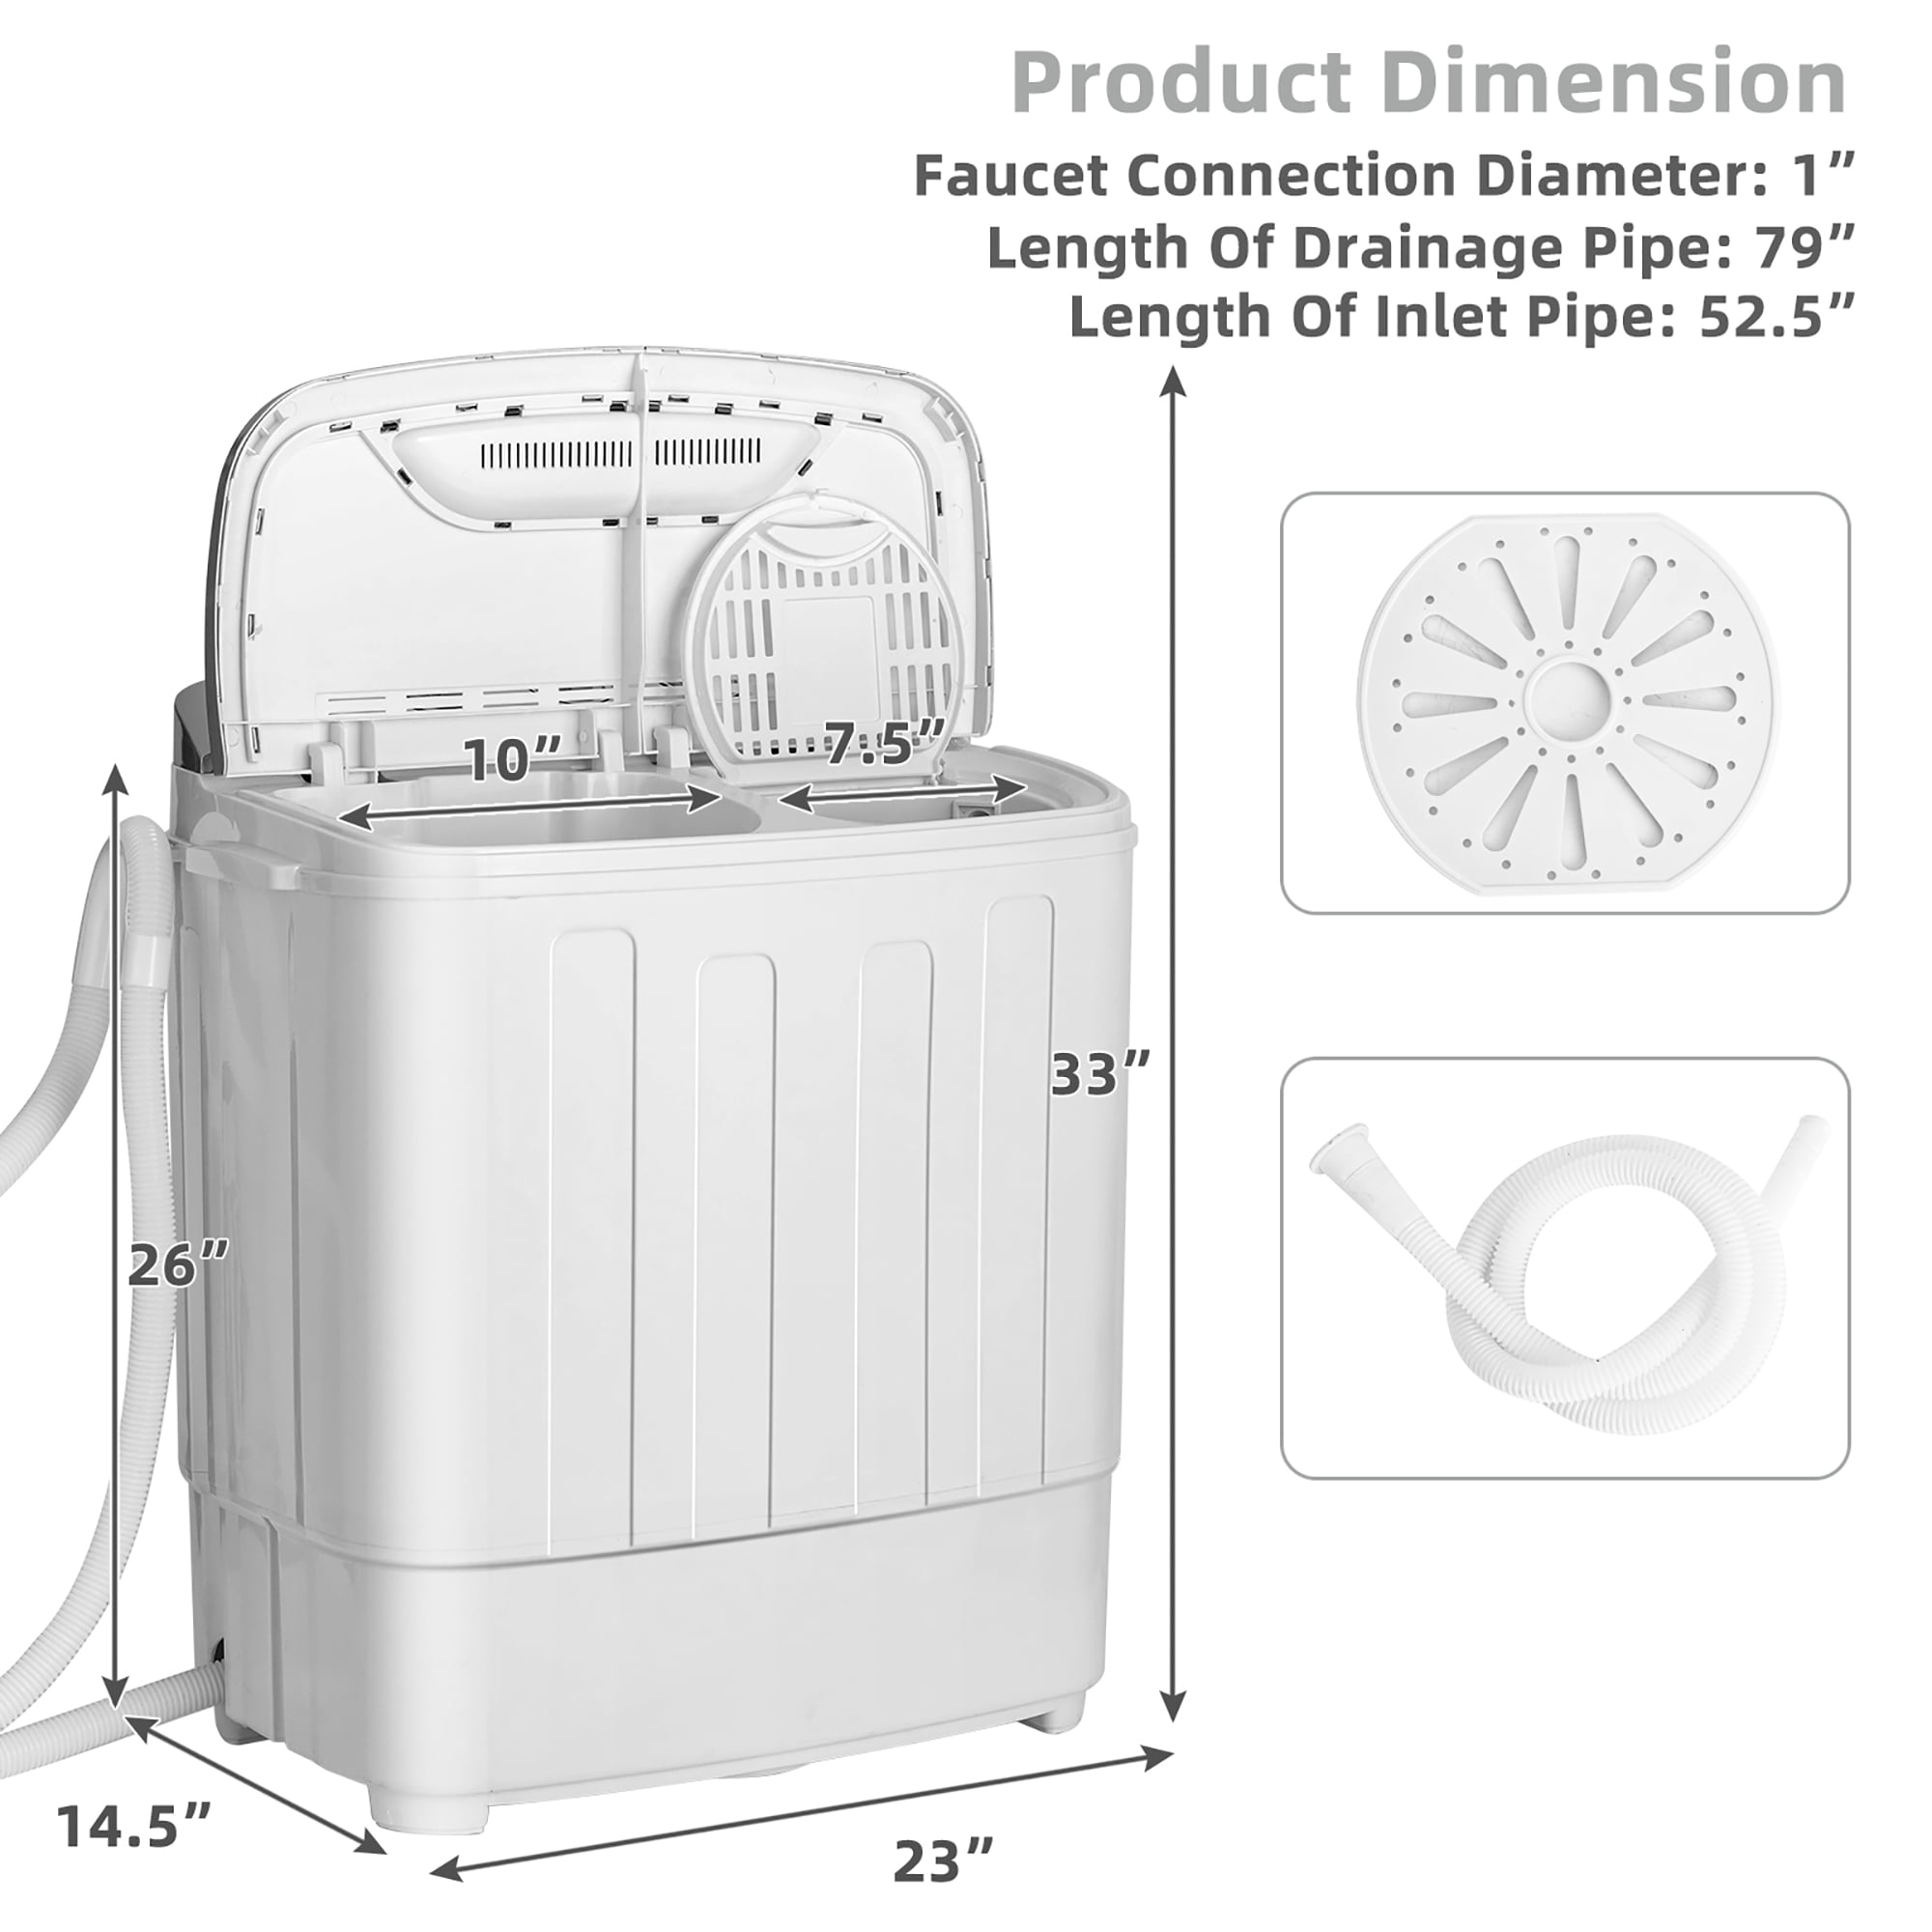 Costway 13lbs Portable Semi-automatic Twin Tub Wash Machine W/ Built-in  Drain Pump Black : Target